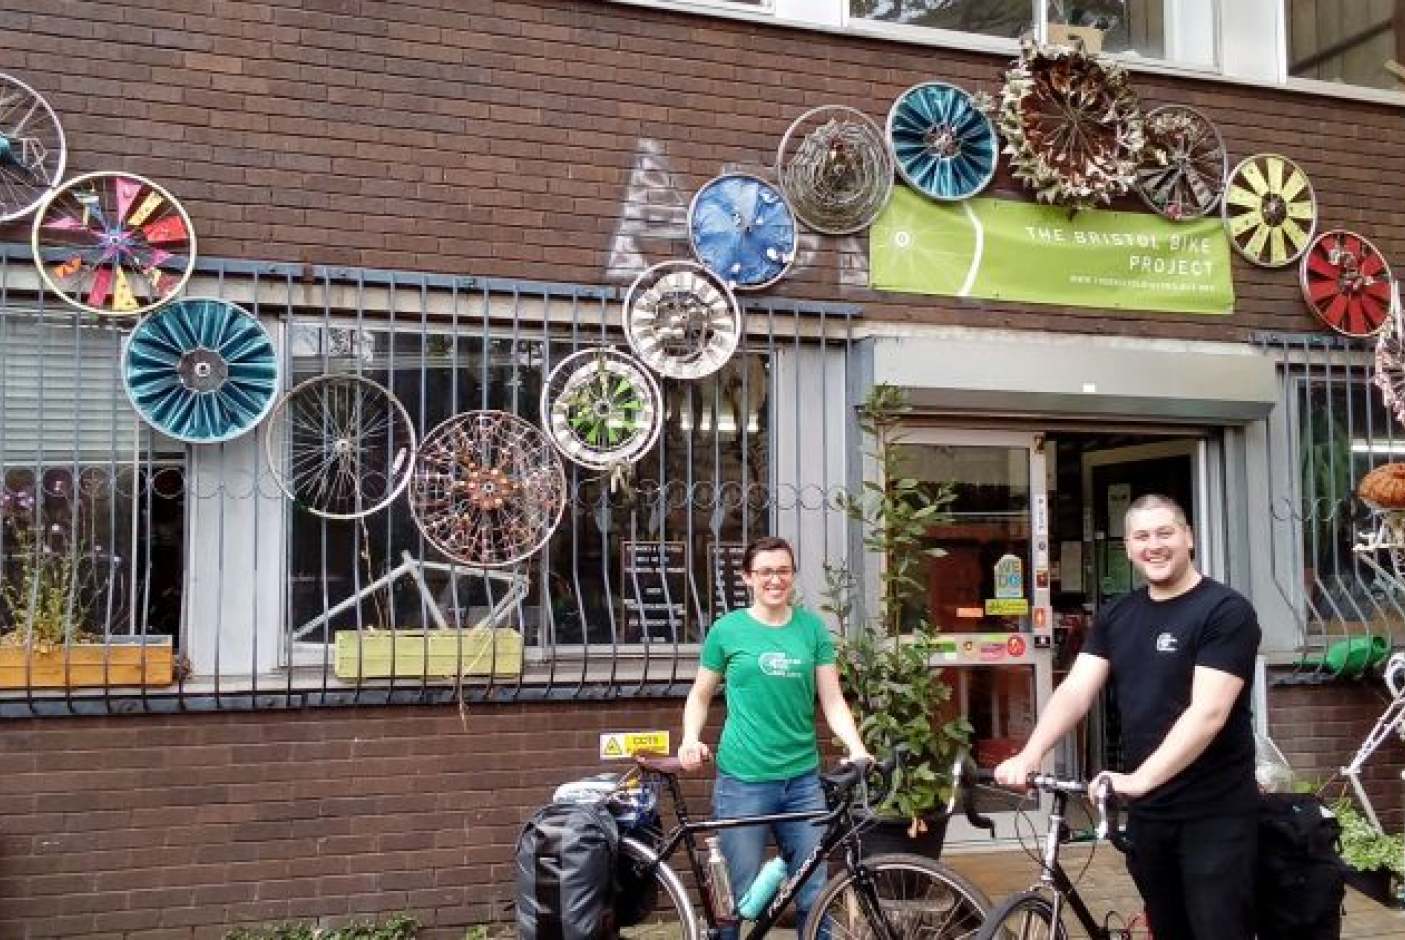 Bike Kitchens Ethical Consumer